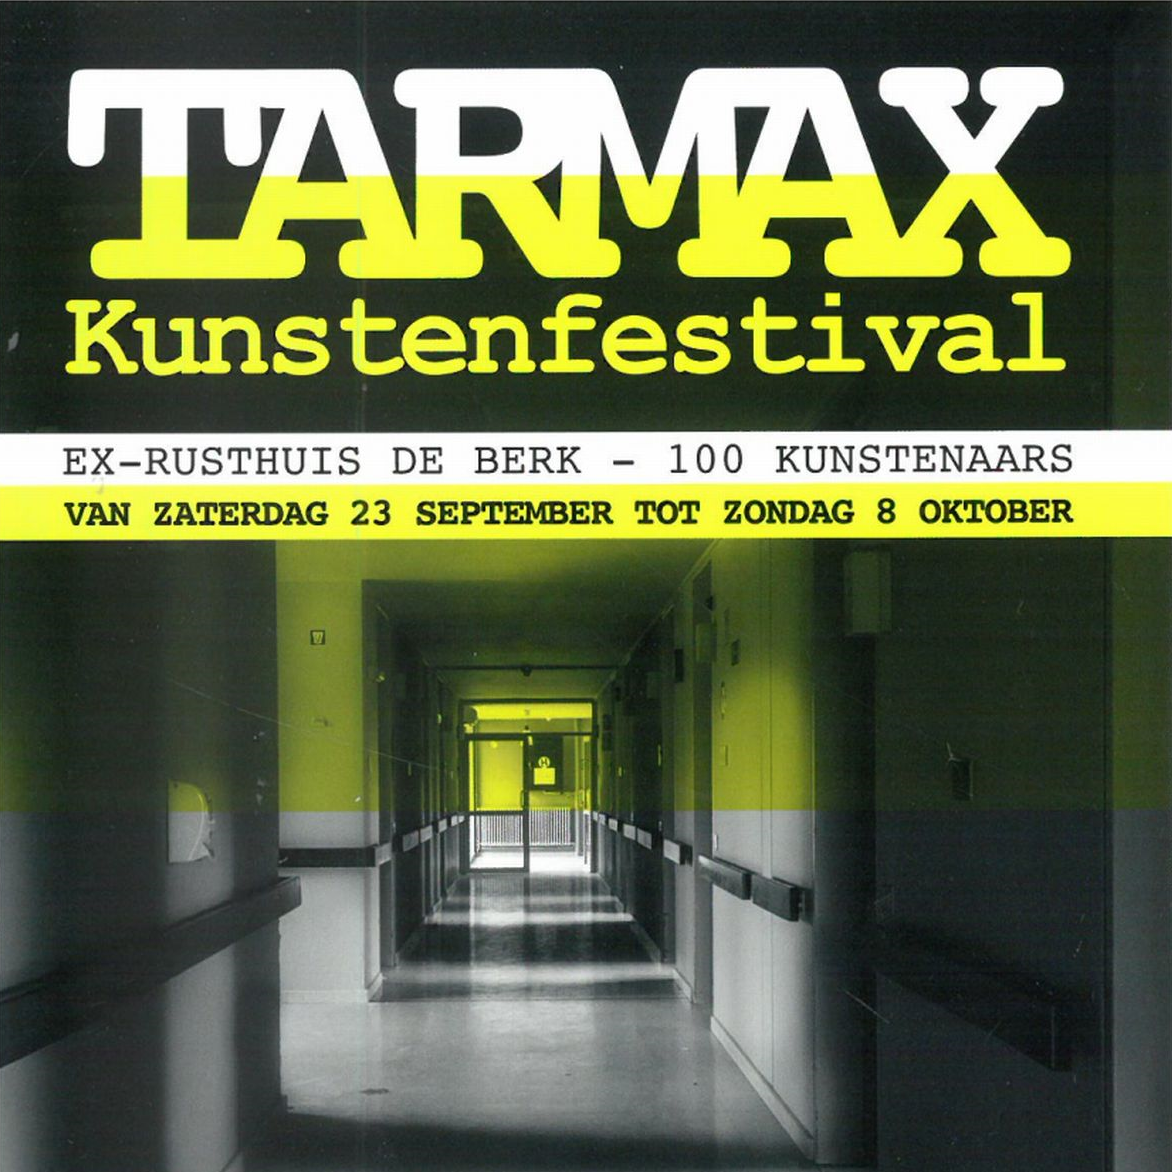 TarmaX Kunstenfestival 2017